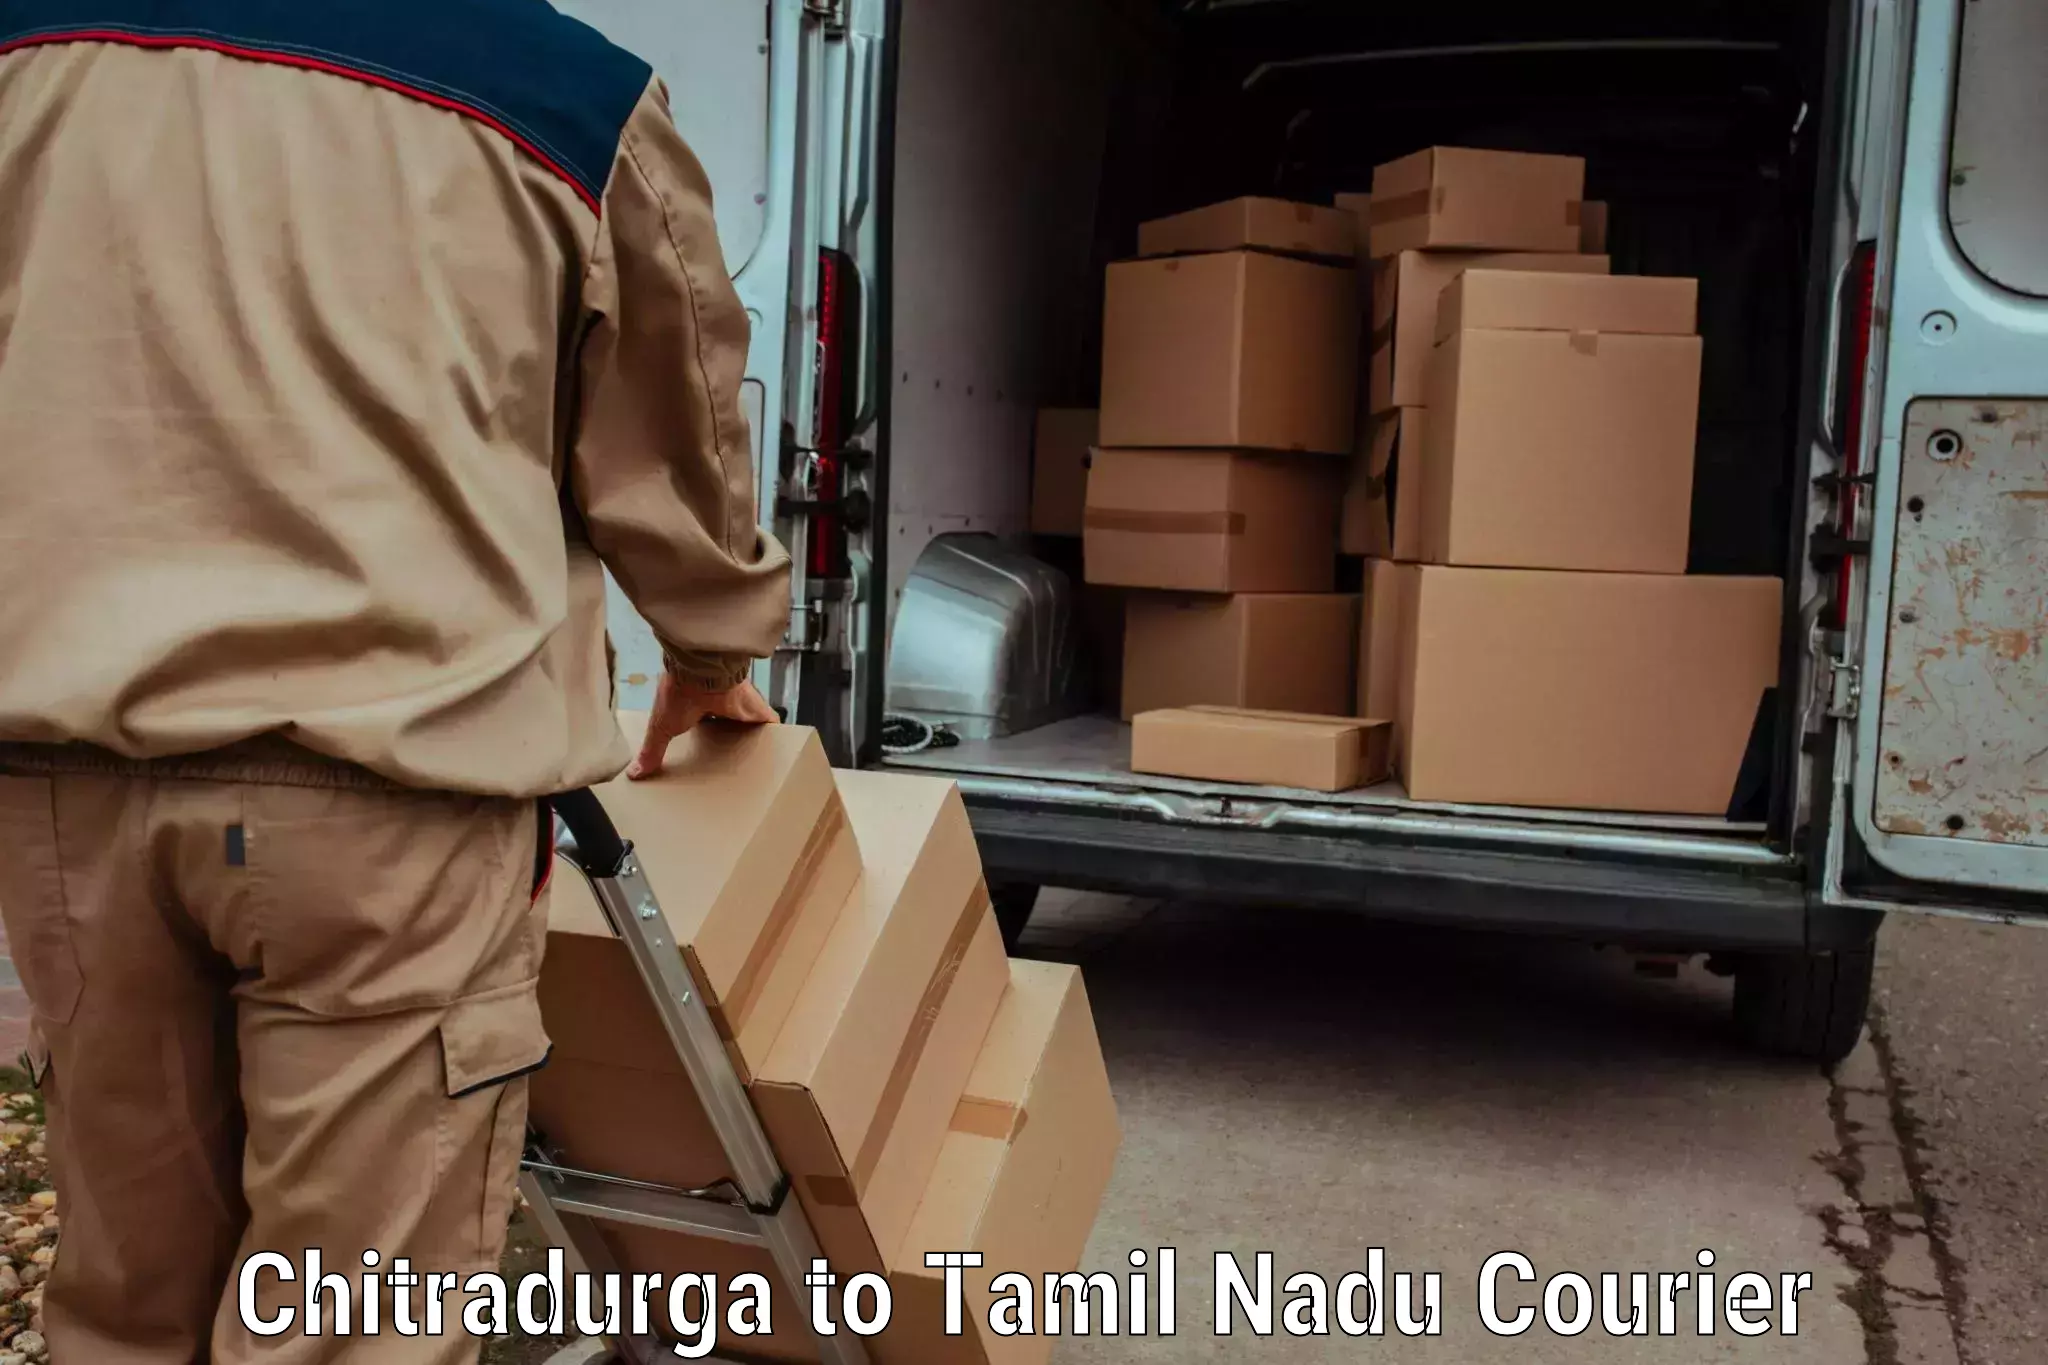 Same day luggage service Chitradurga to Tamil Nadu